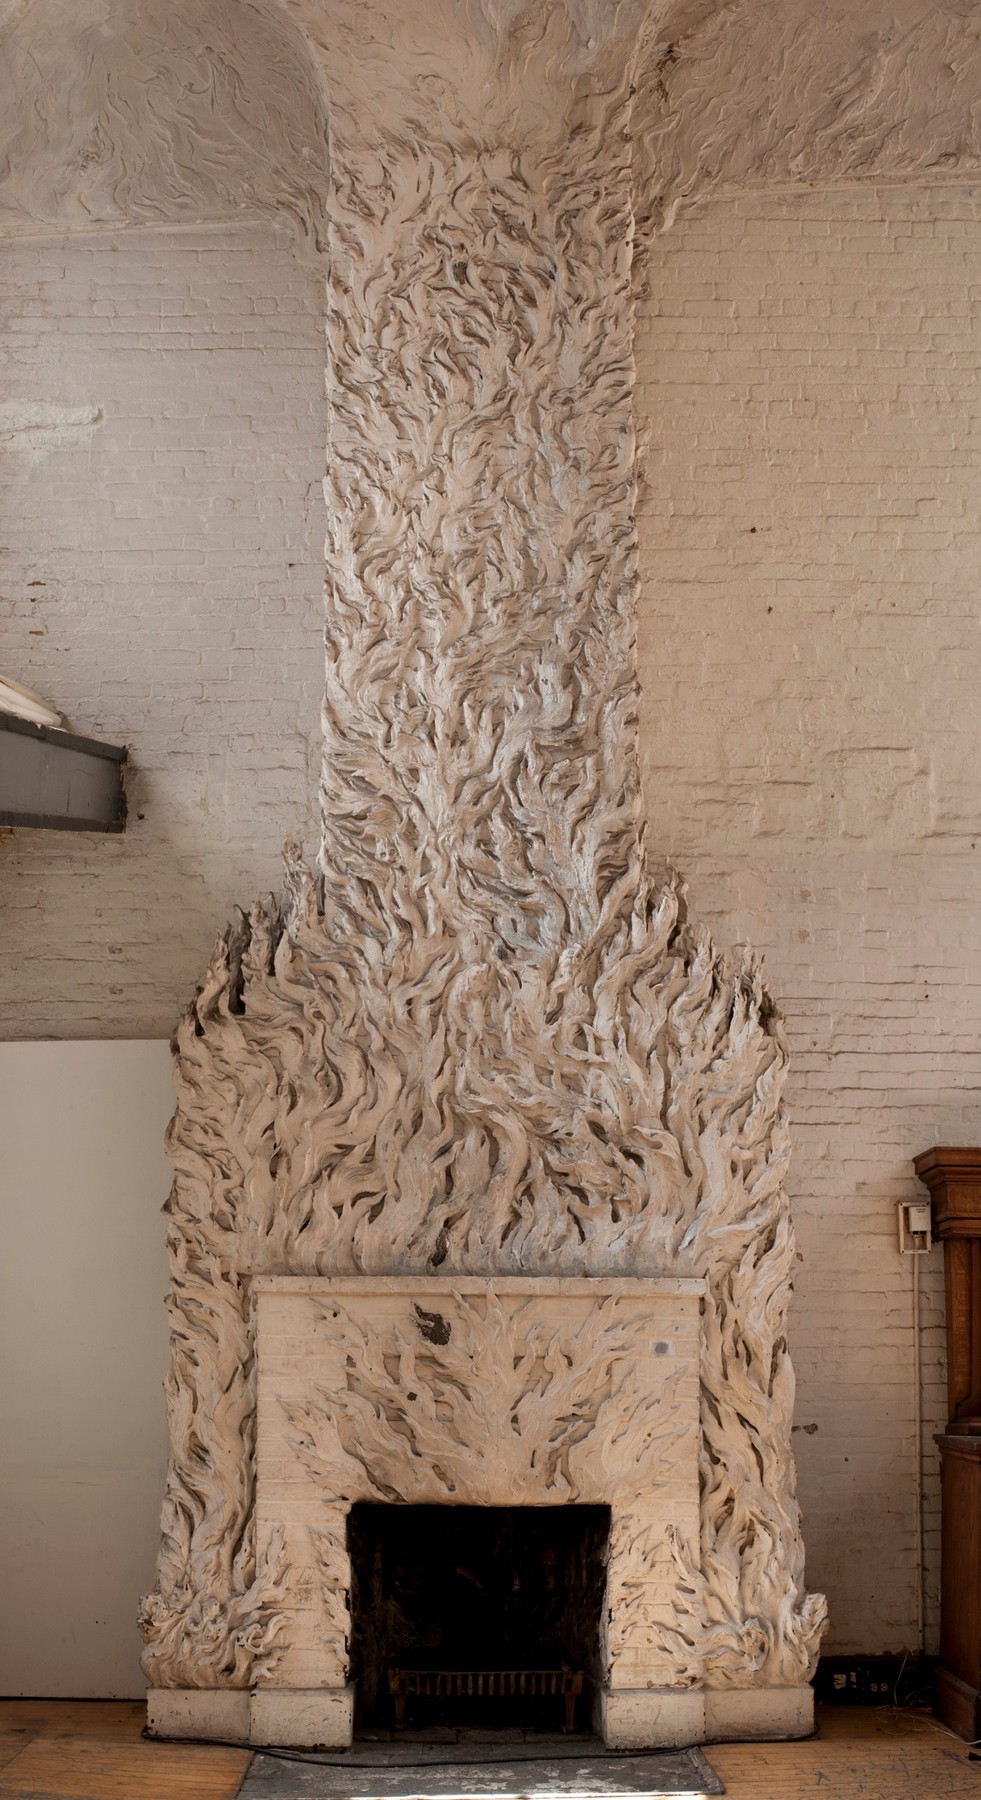 Fireplace by Robert Winthrop Chanler at Gertrude Vanderbilt Whitney's studio in New York City, 1918.